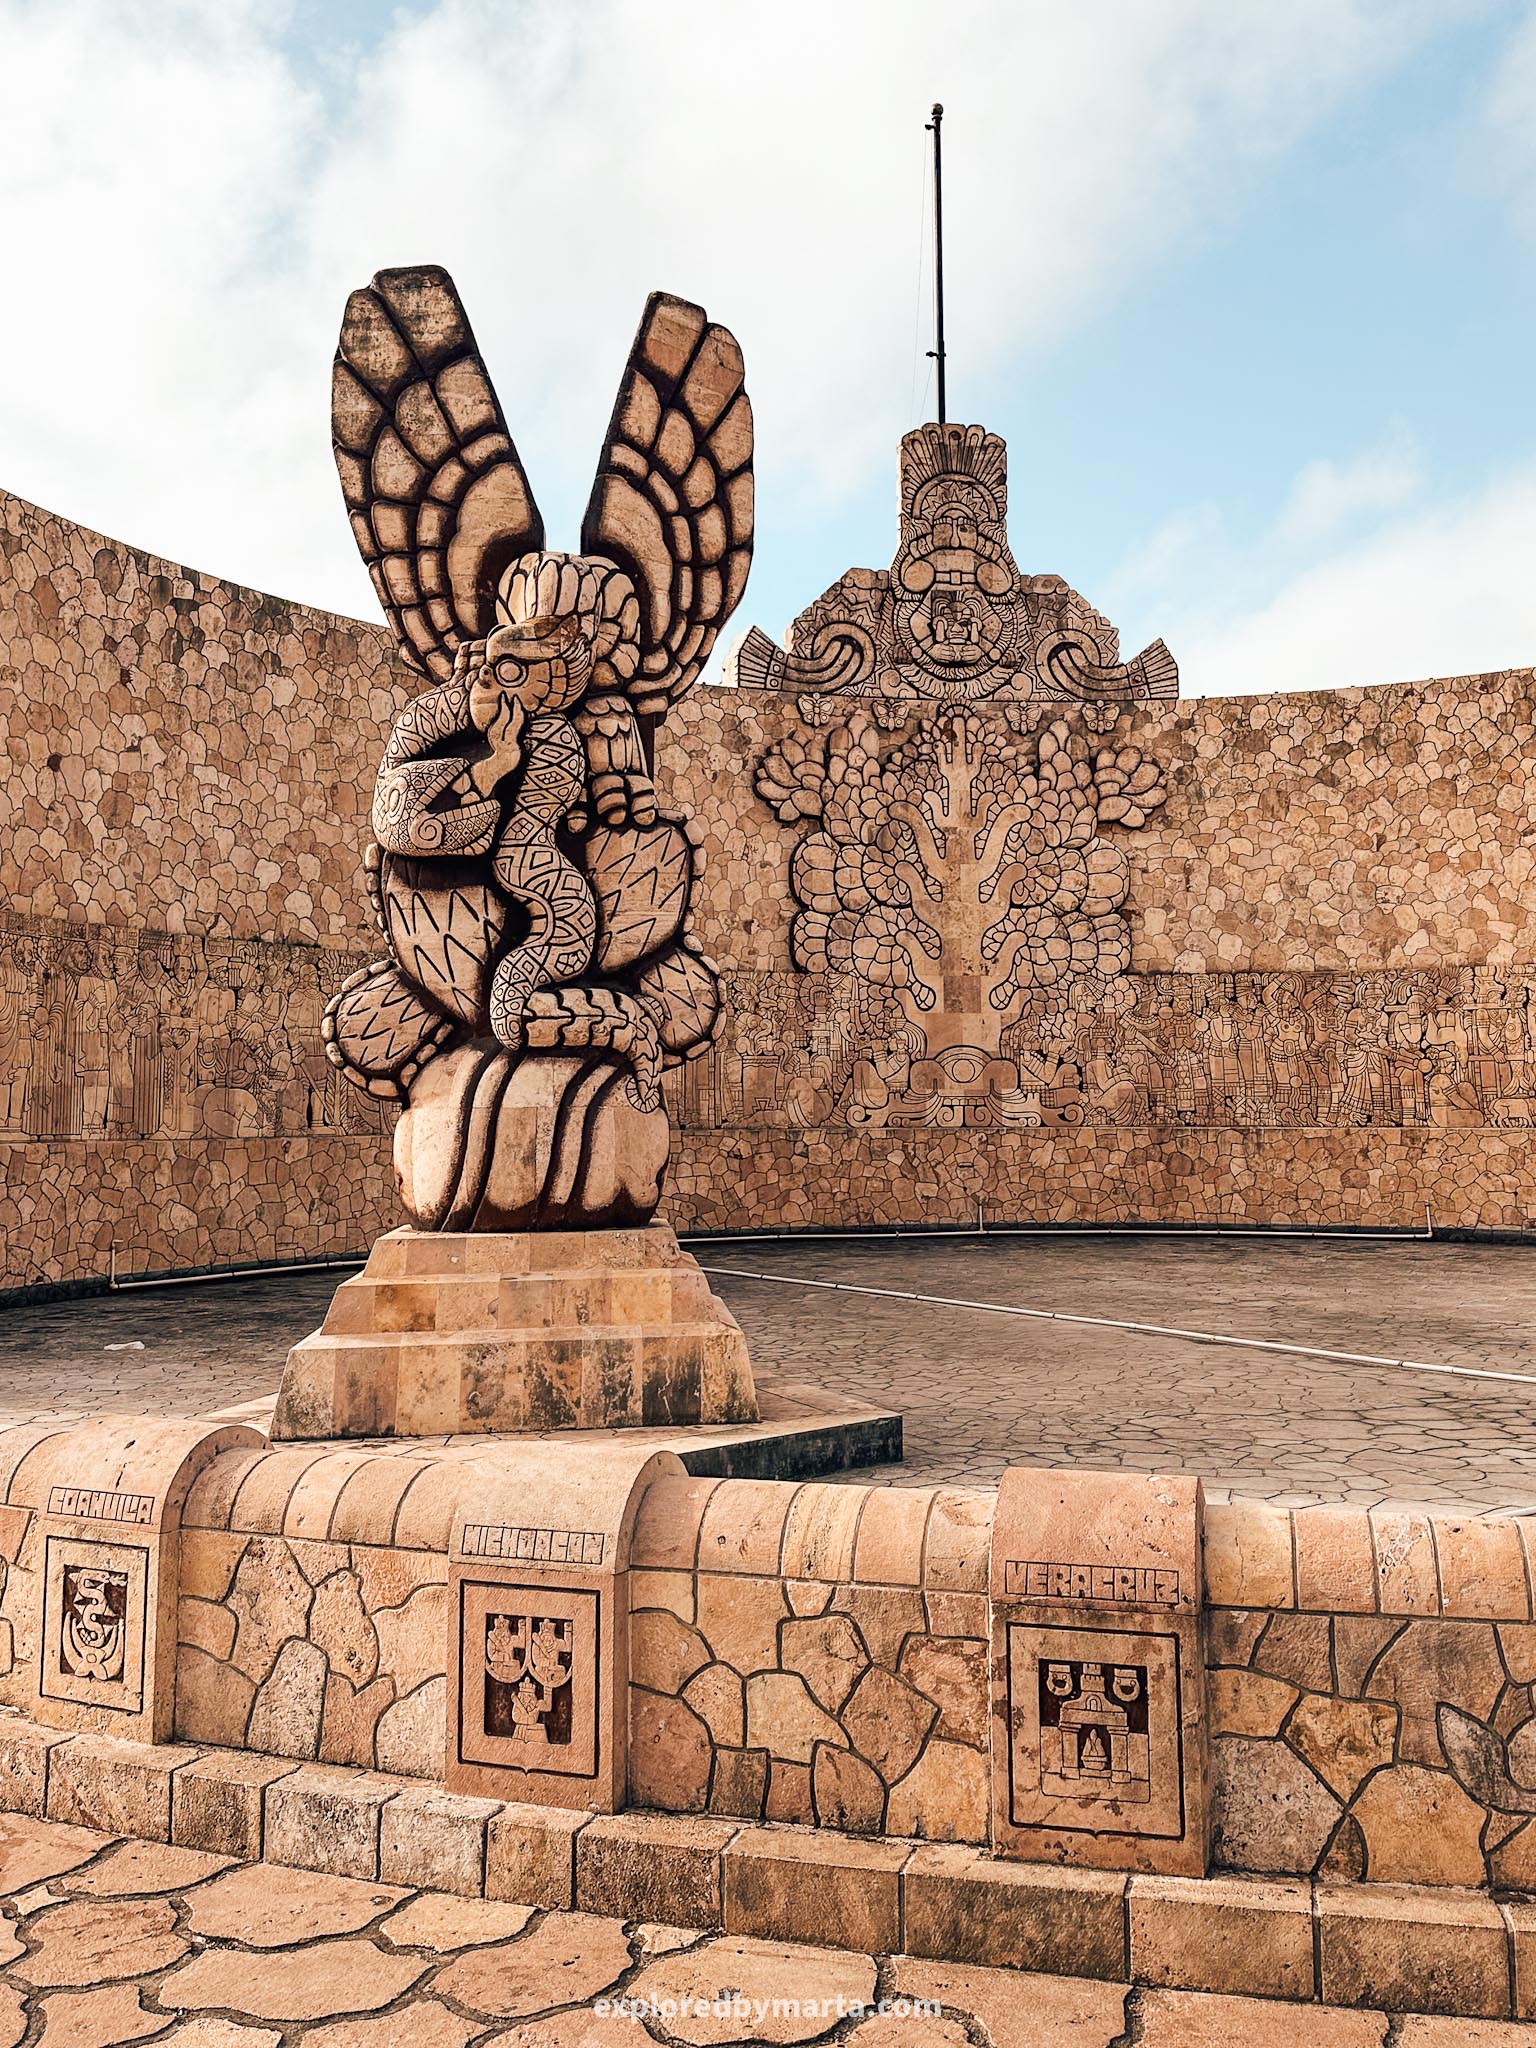 Merida, Mexico - Monumento a La Patria monument in Merida - a Mayan style homage to the history of Mexico